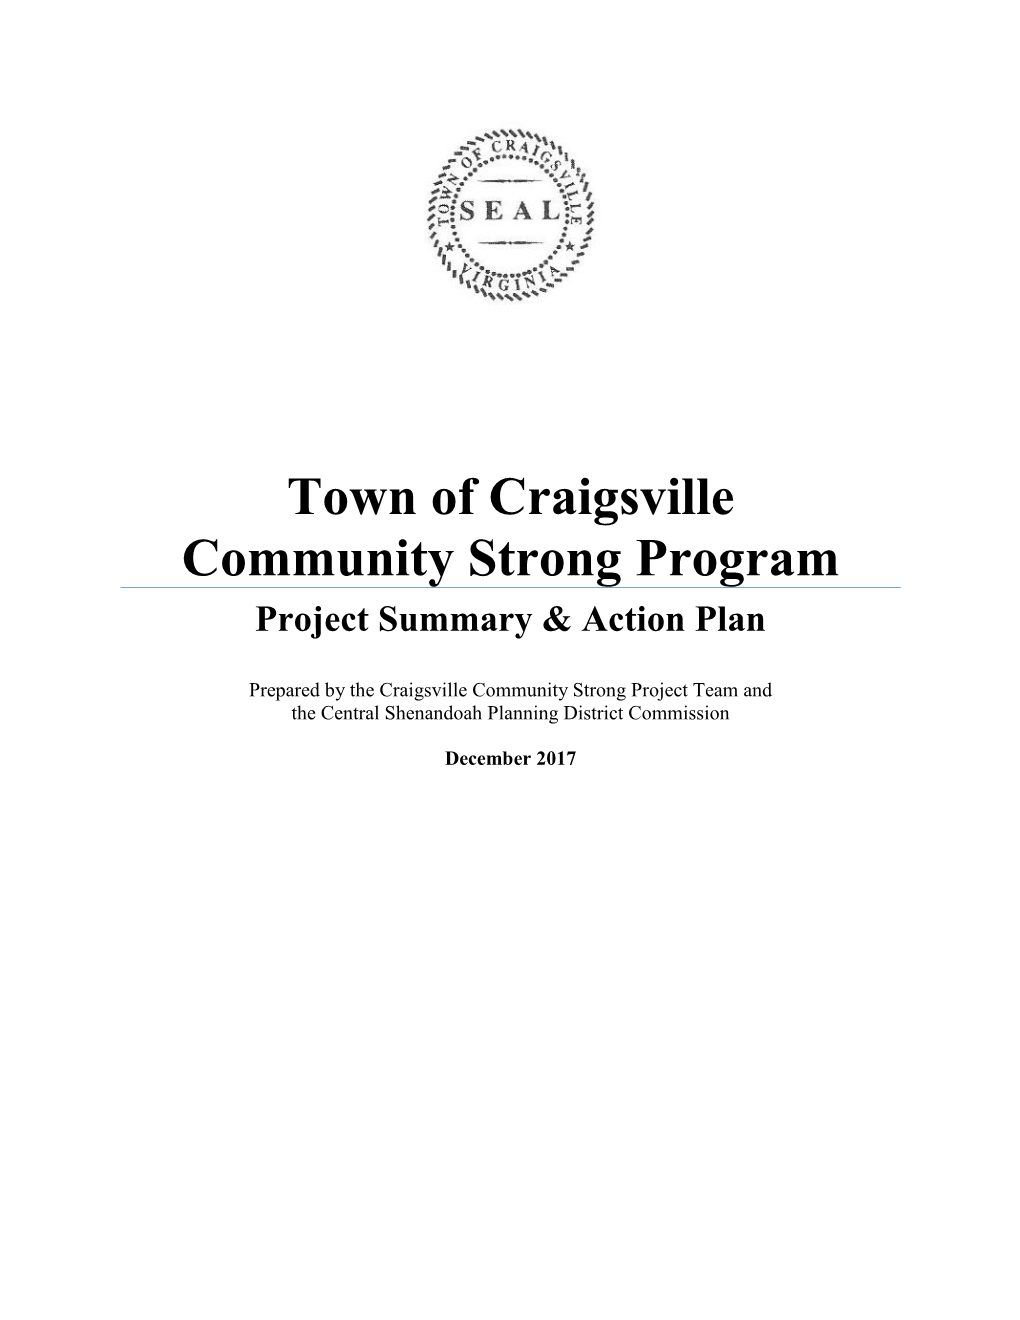 Craigsville Community Strong Program Project Summary & Action Plan